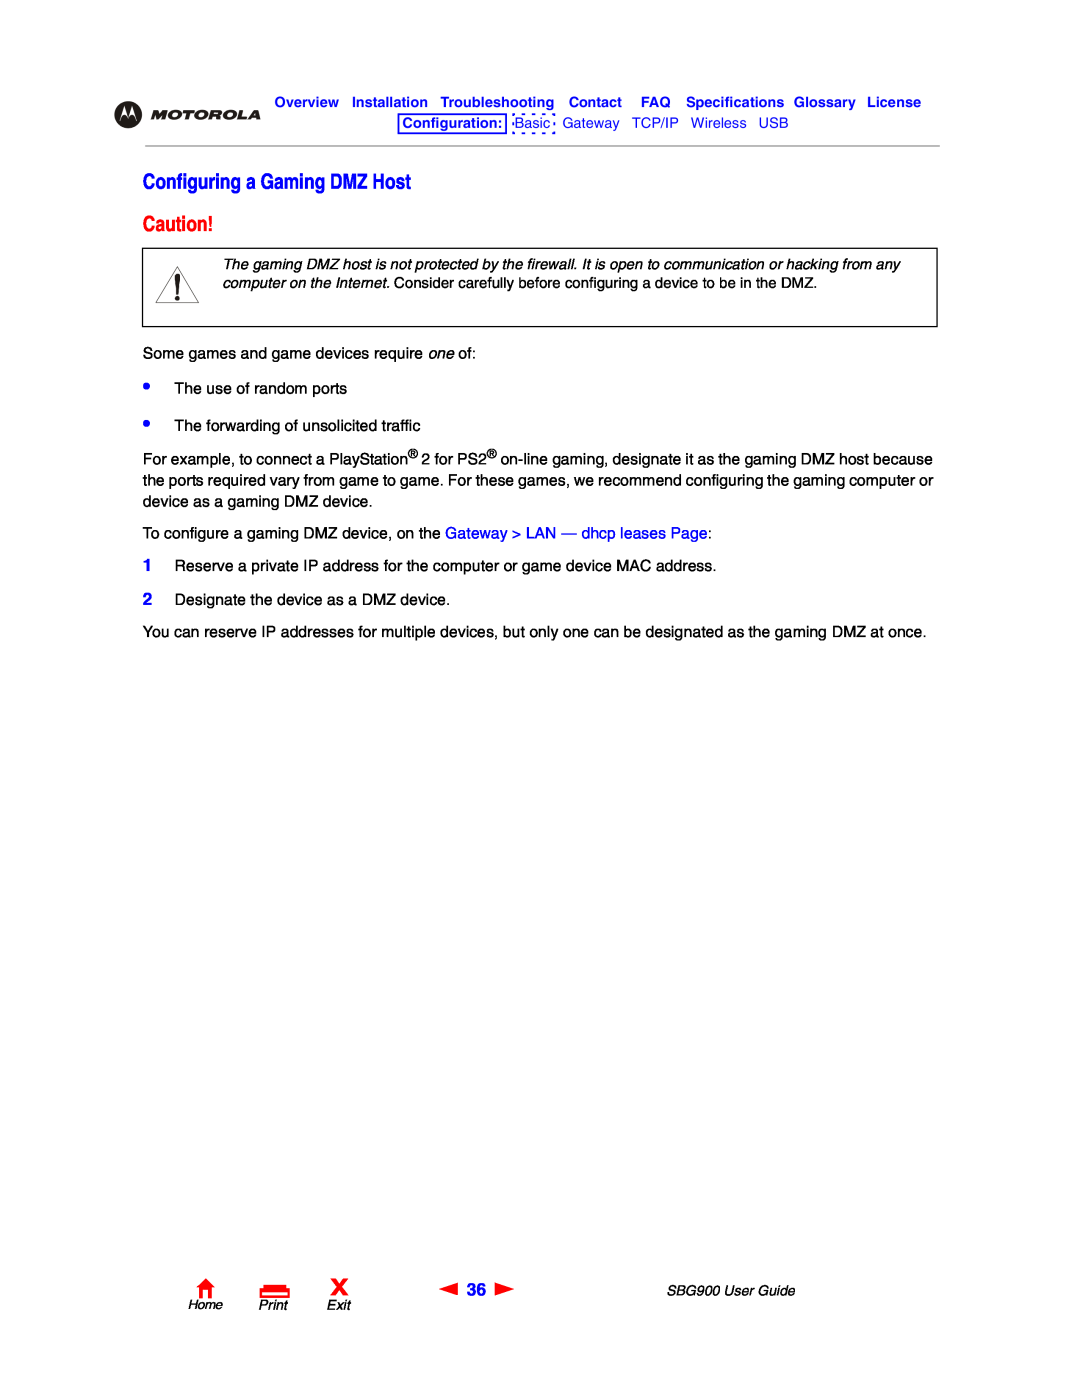 Motorola SBG900 manual Configuring a Gaming DMZ Host 